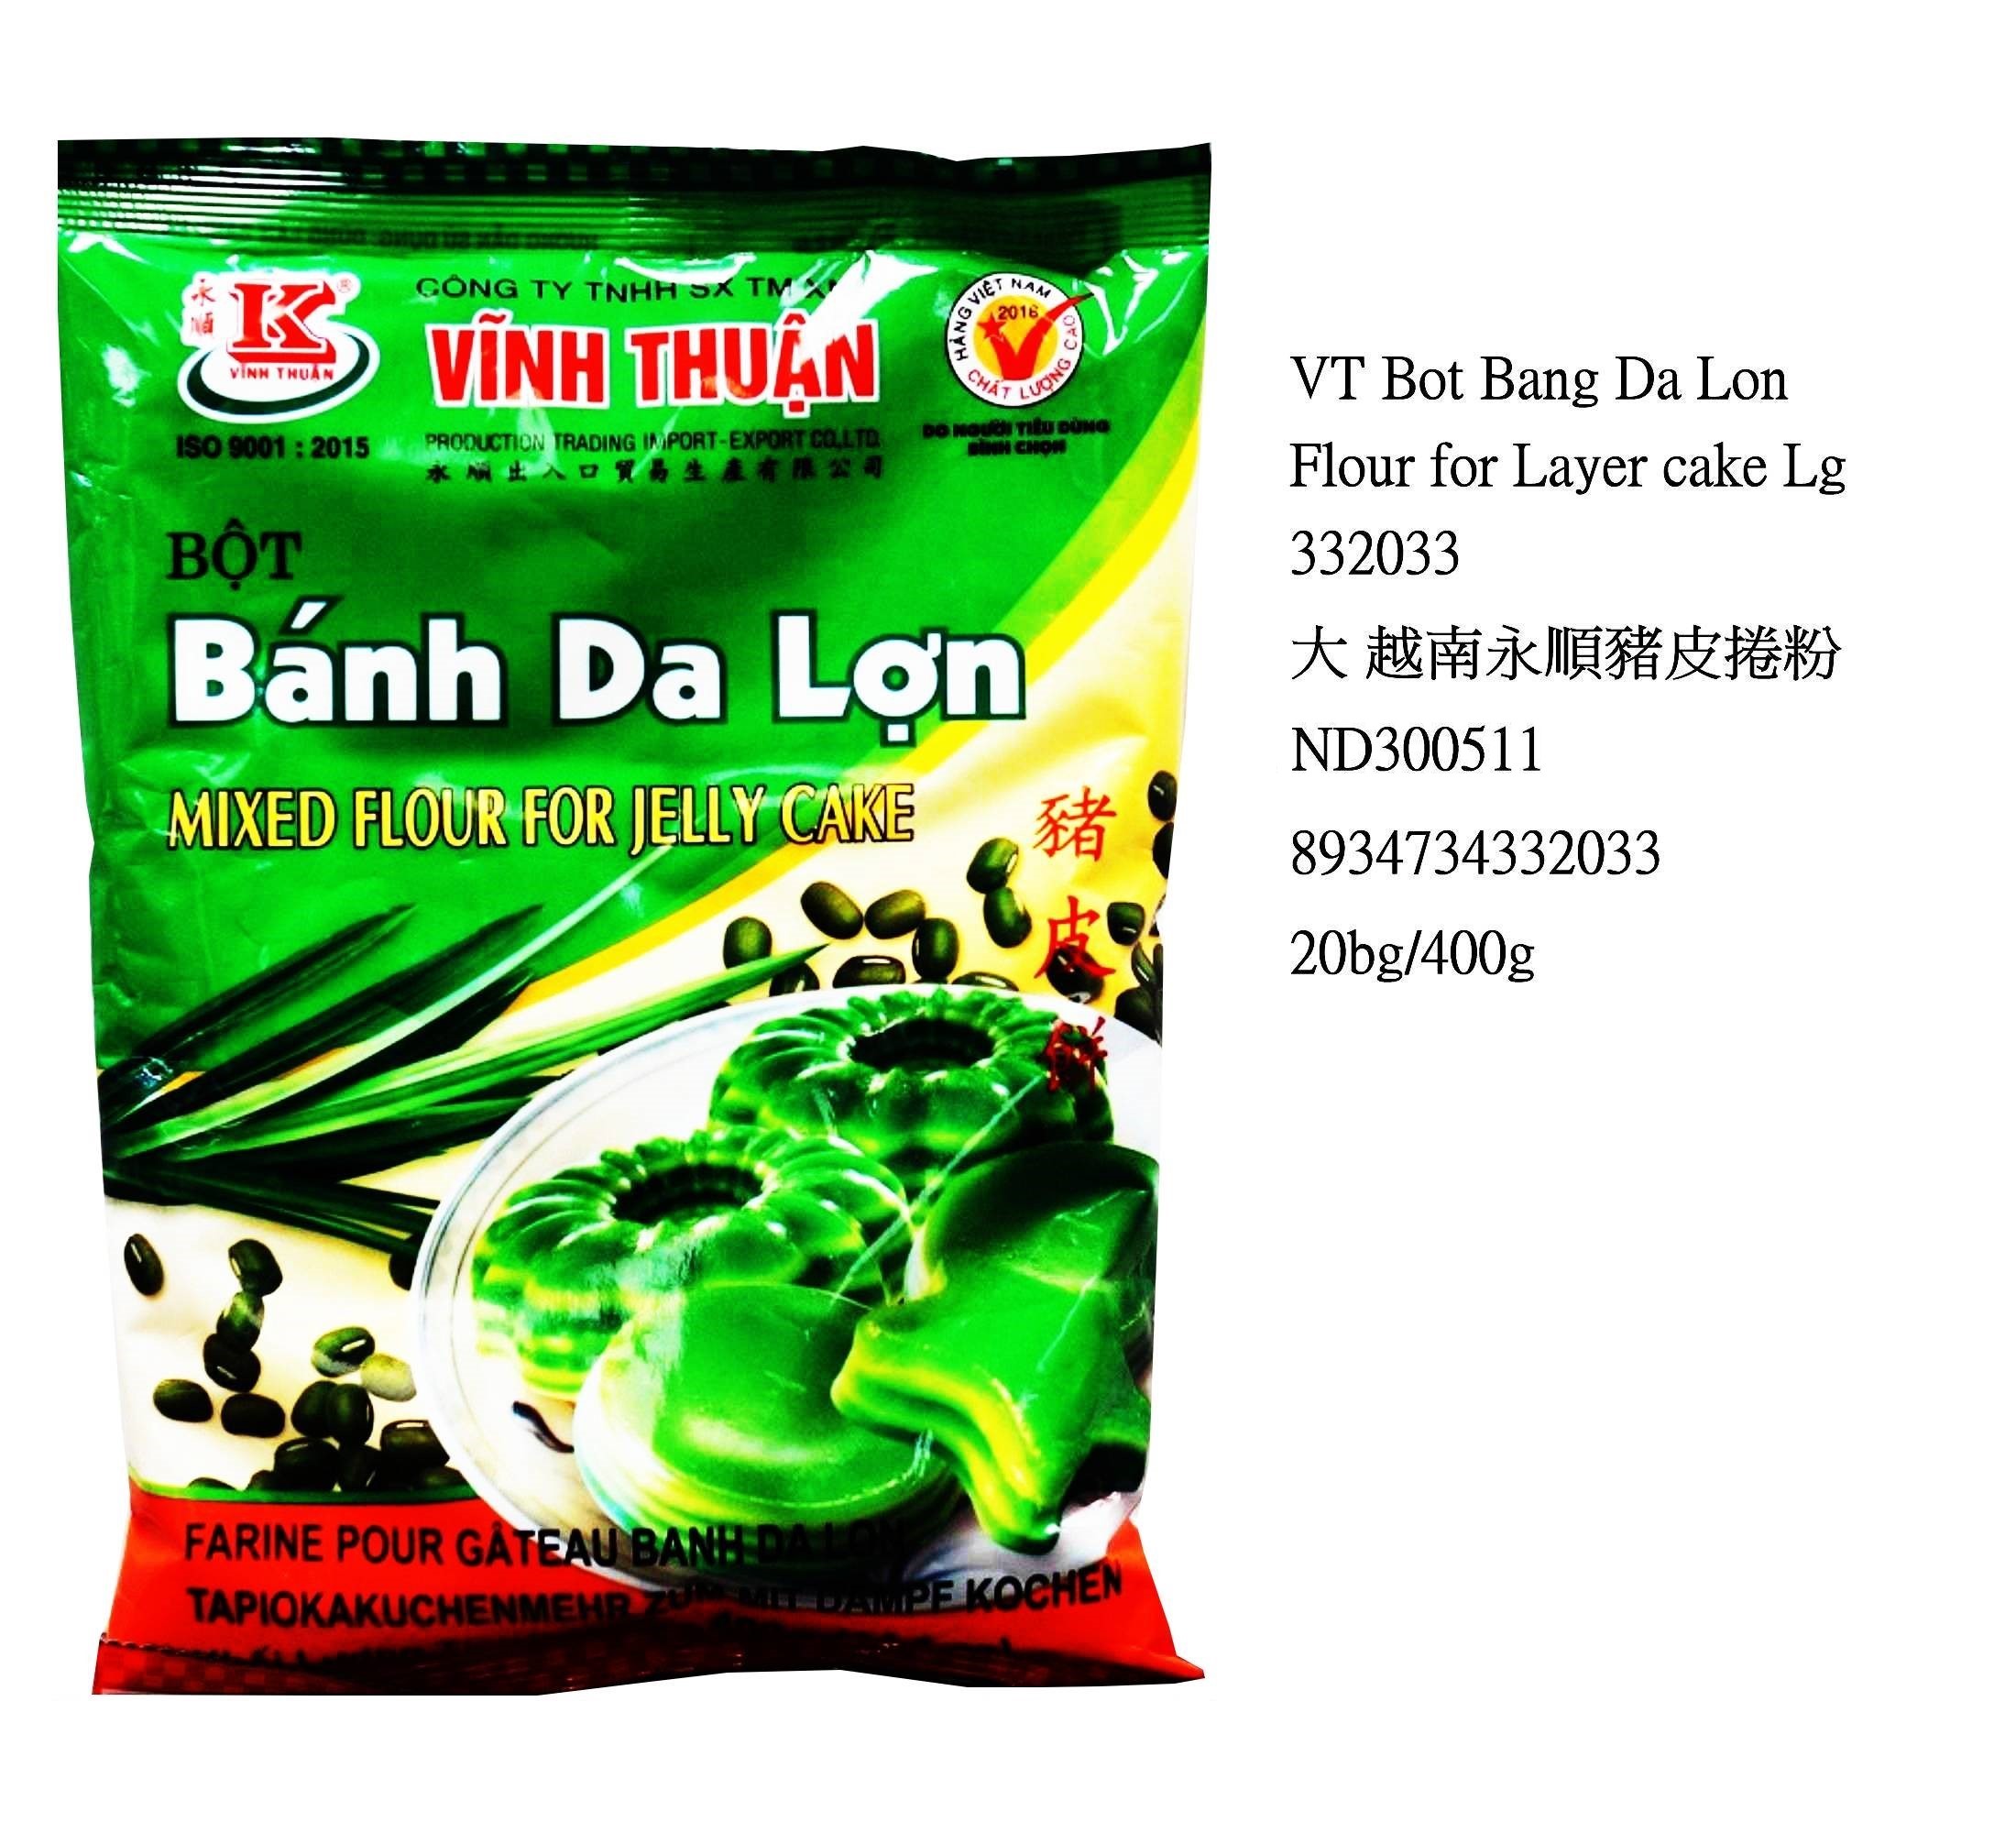 VINH THUAN MIXED FLOUR FOR JELLY CAKE BANH DA LON ND300511